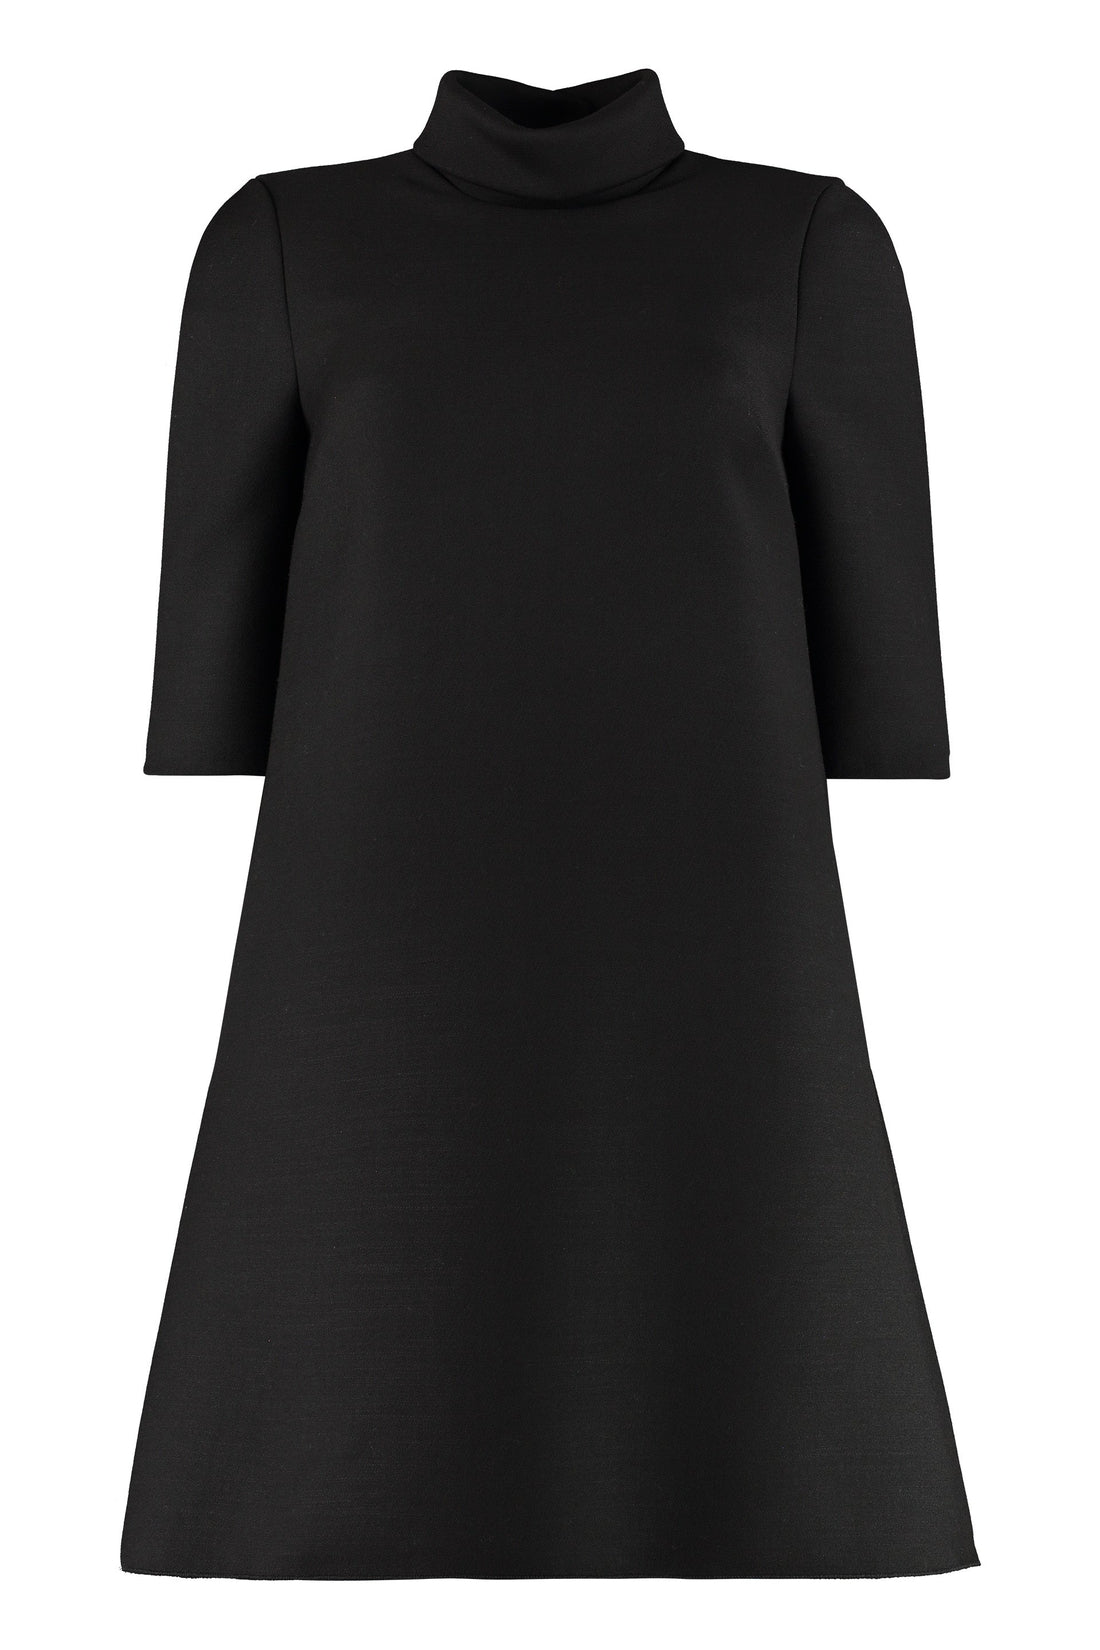 Dolce & Gabbana-OUTLET-SALE-Knitted turtleneck dress-ARCHIVIST